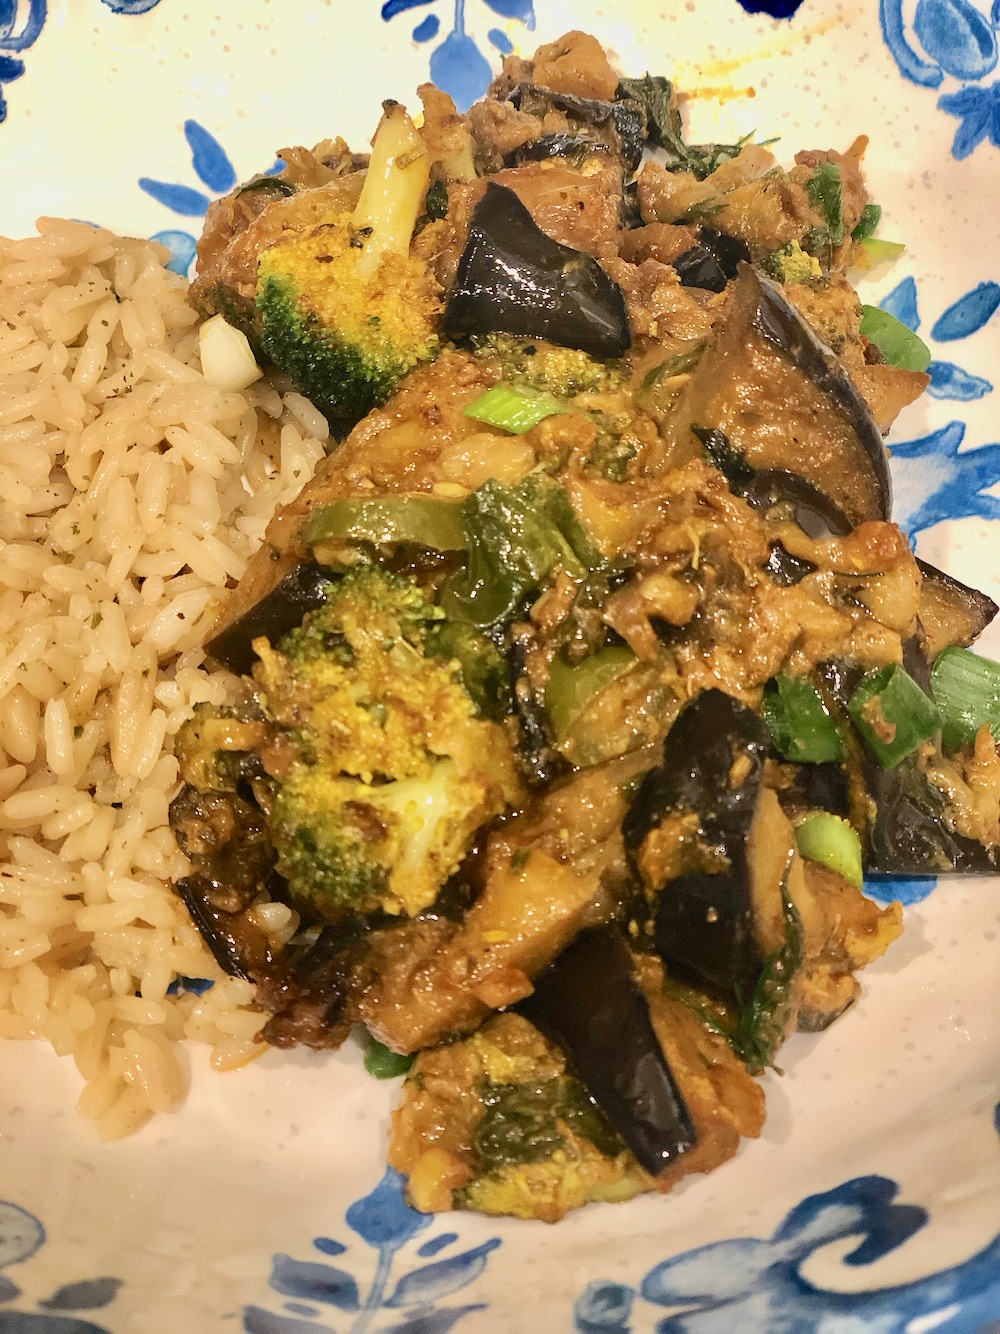 Serve your eggplant broccoli dijonnaise with rice pilaf